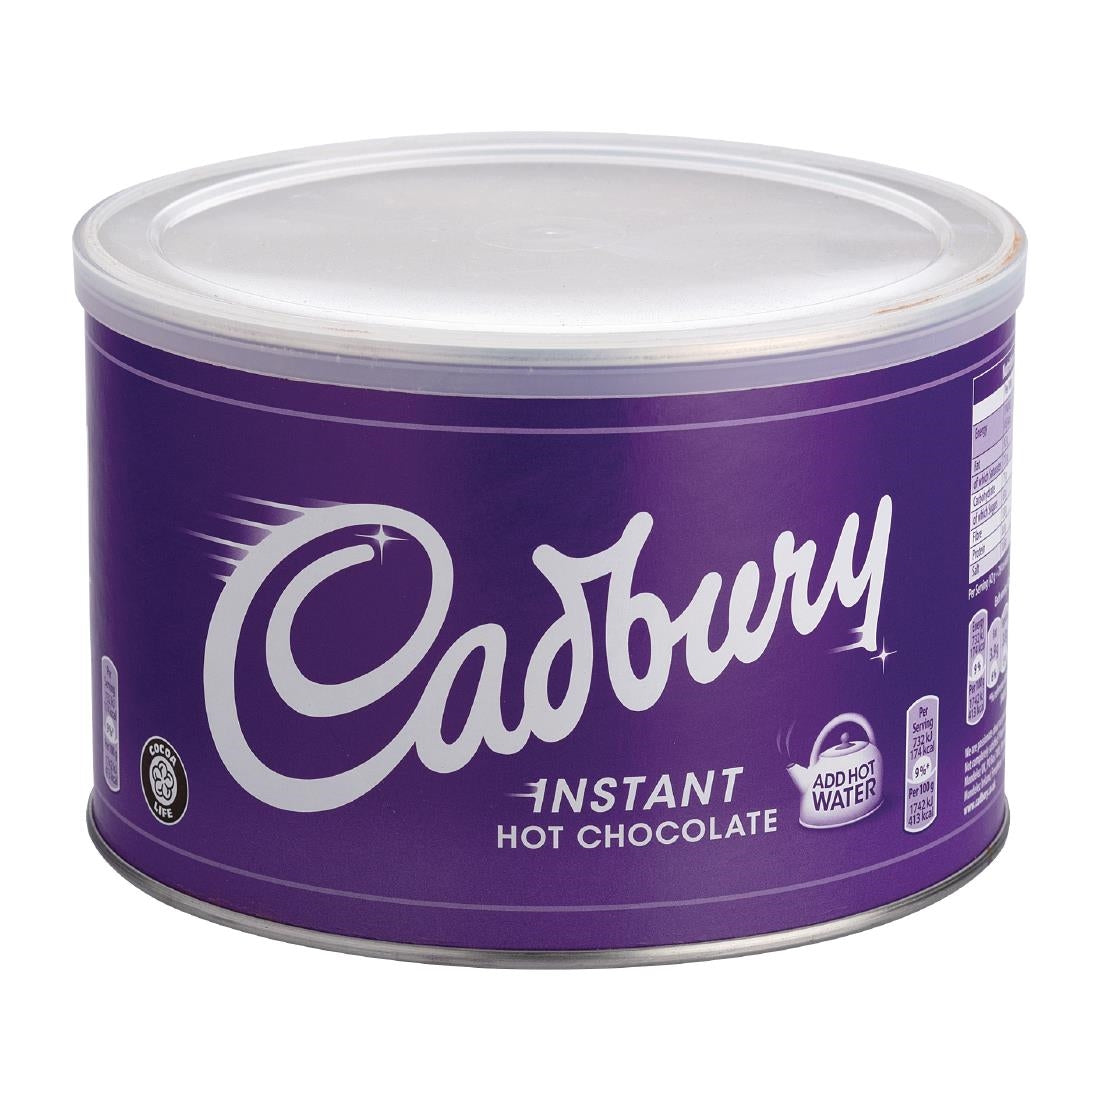 FW851 Cadburys Instant Hot Chocolate 1kg JD Catering Equipment Solutions Ltd